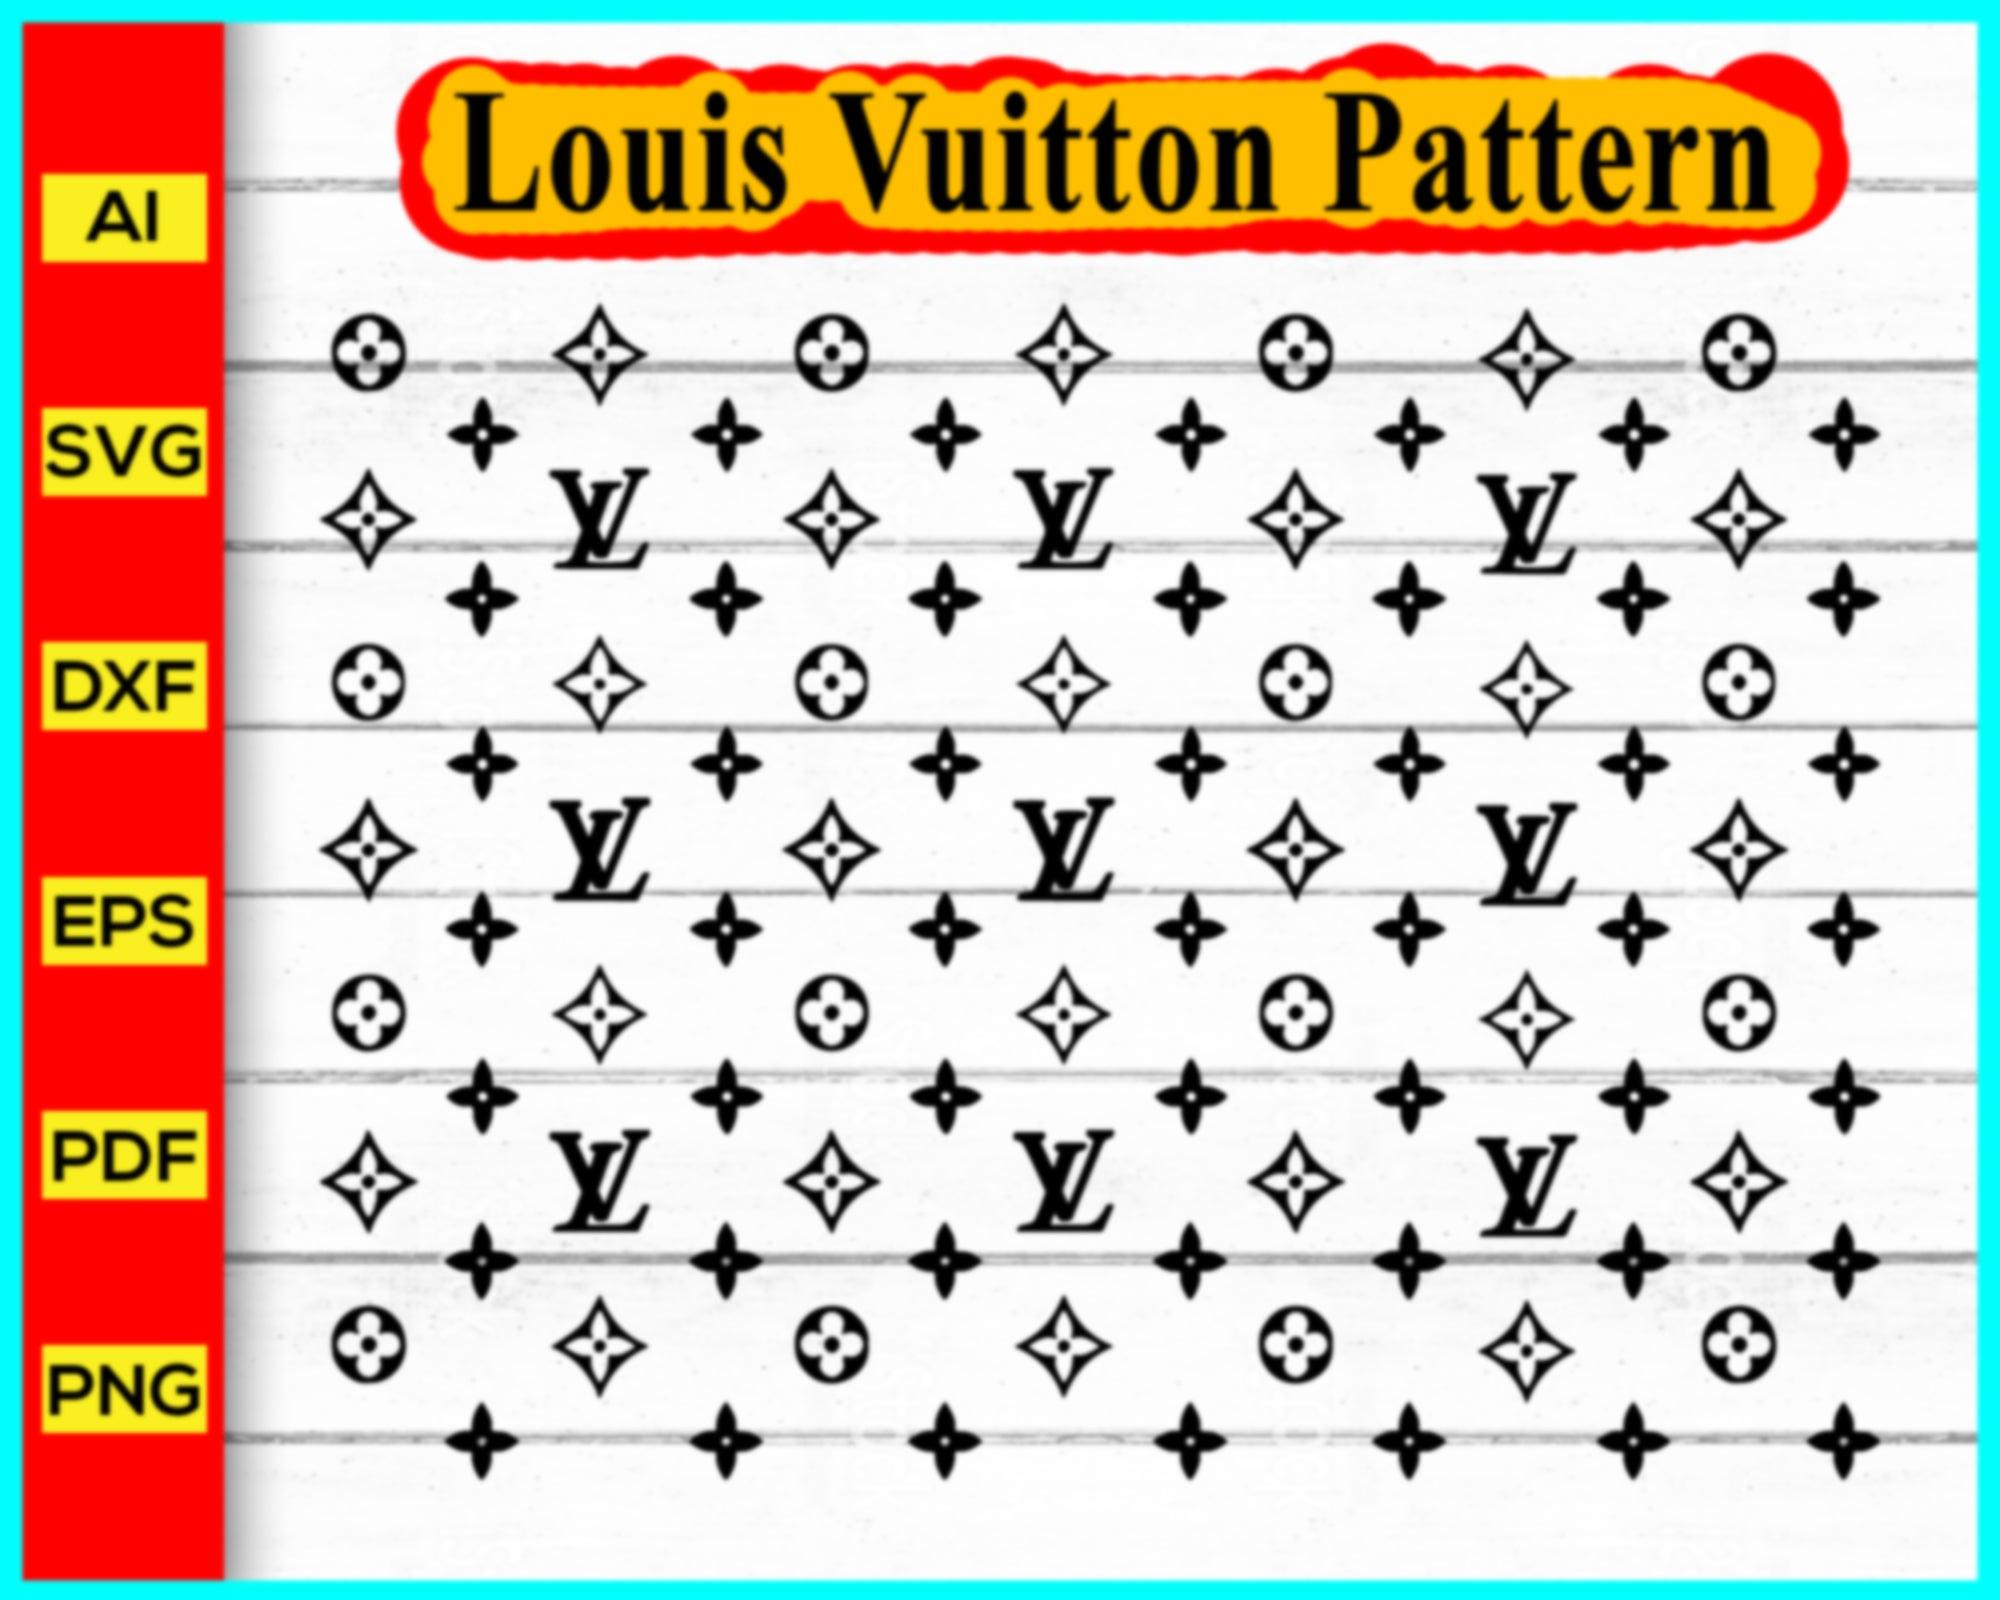 Buy Now Guaranteed Satisfied Louis Vuitton Pattern Svg, Louis Vuitton ...